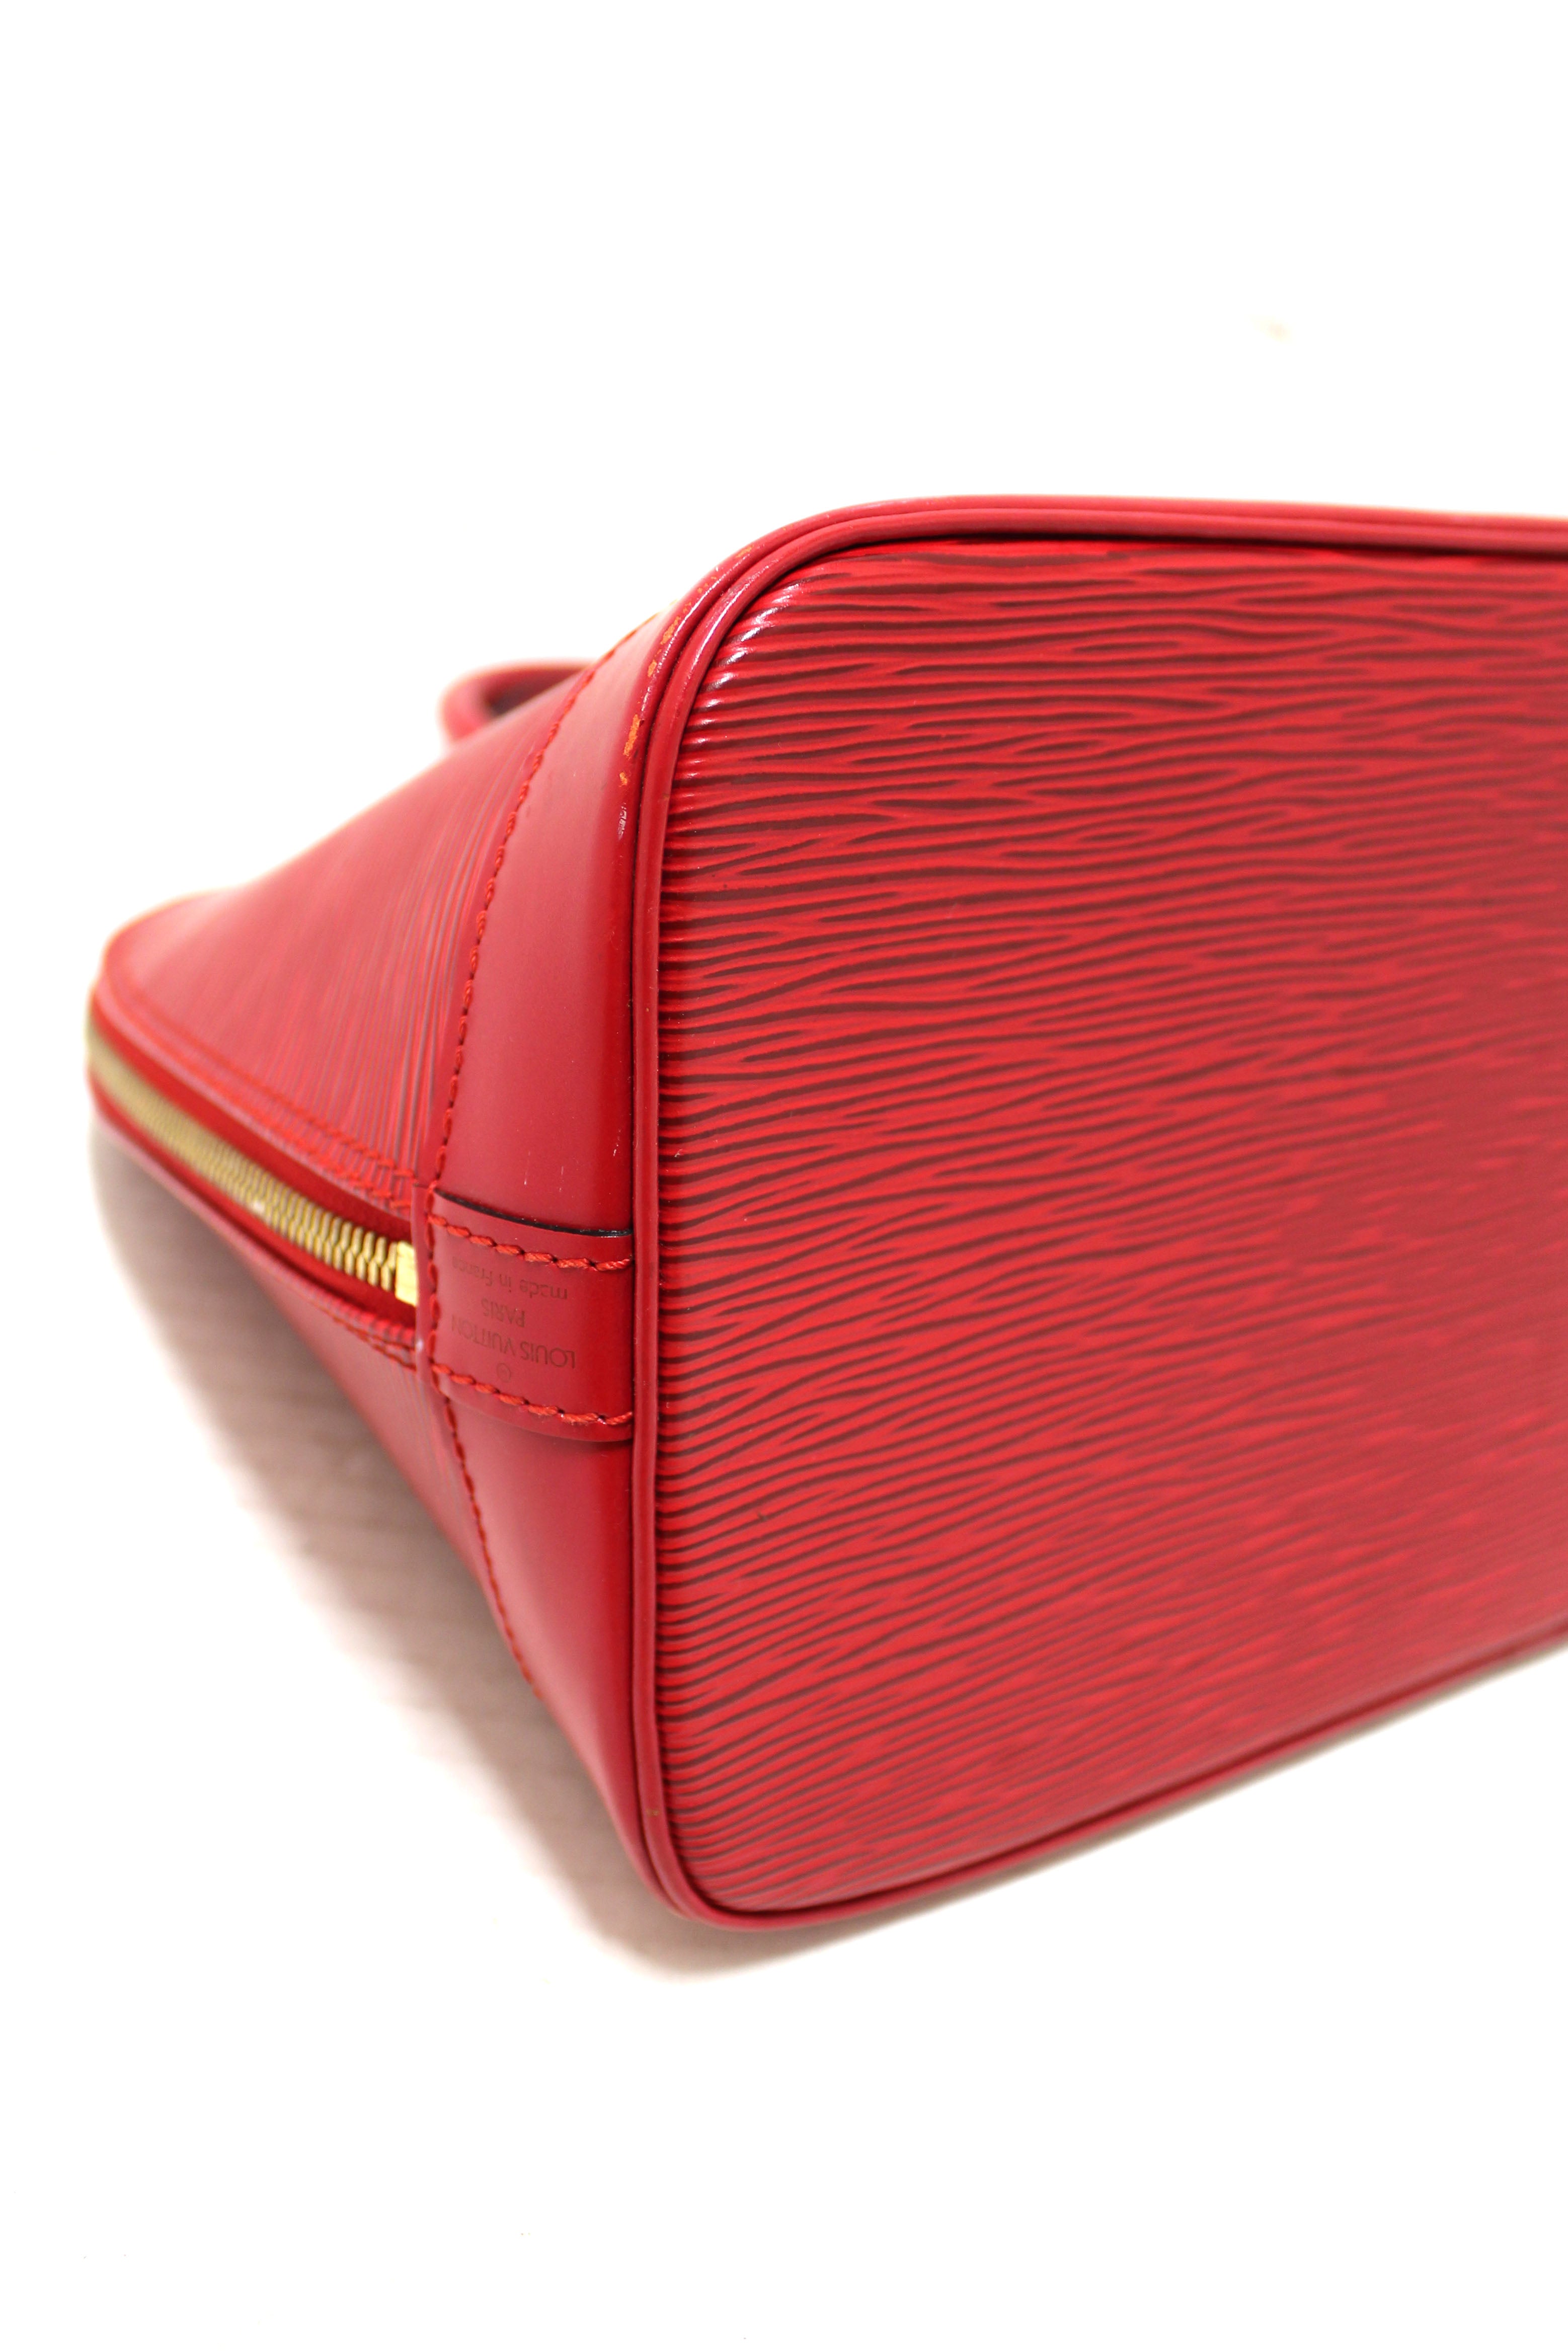 Authentic Louis Vuitton Red Epi Leather Alma PM Handbag